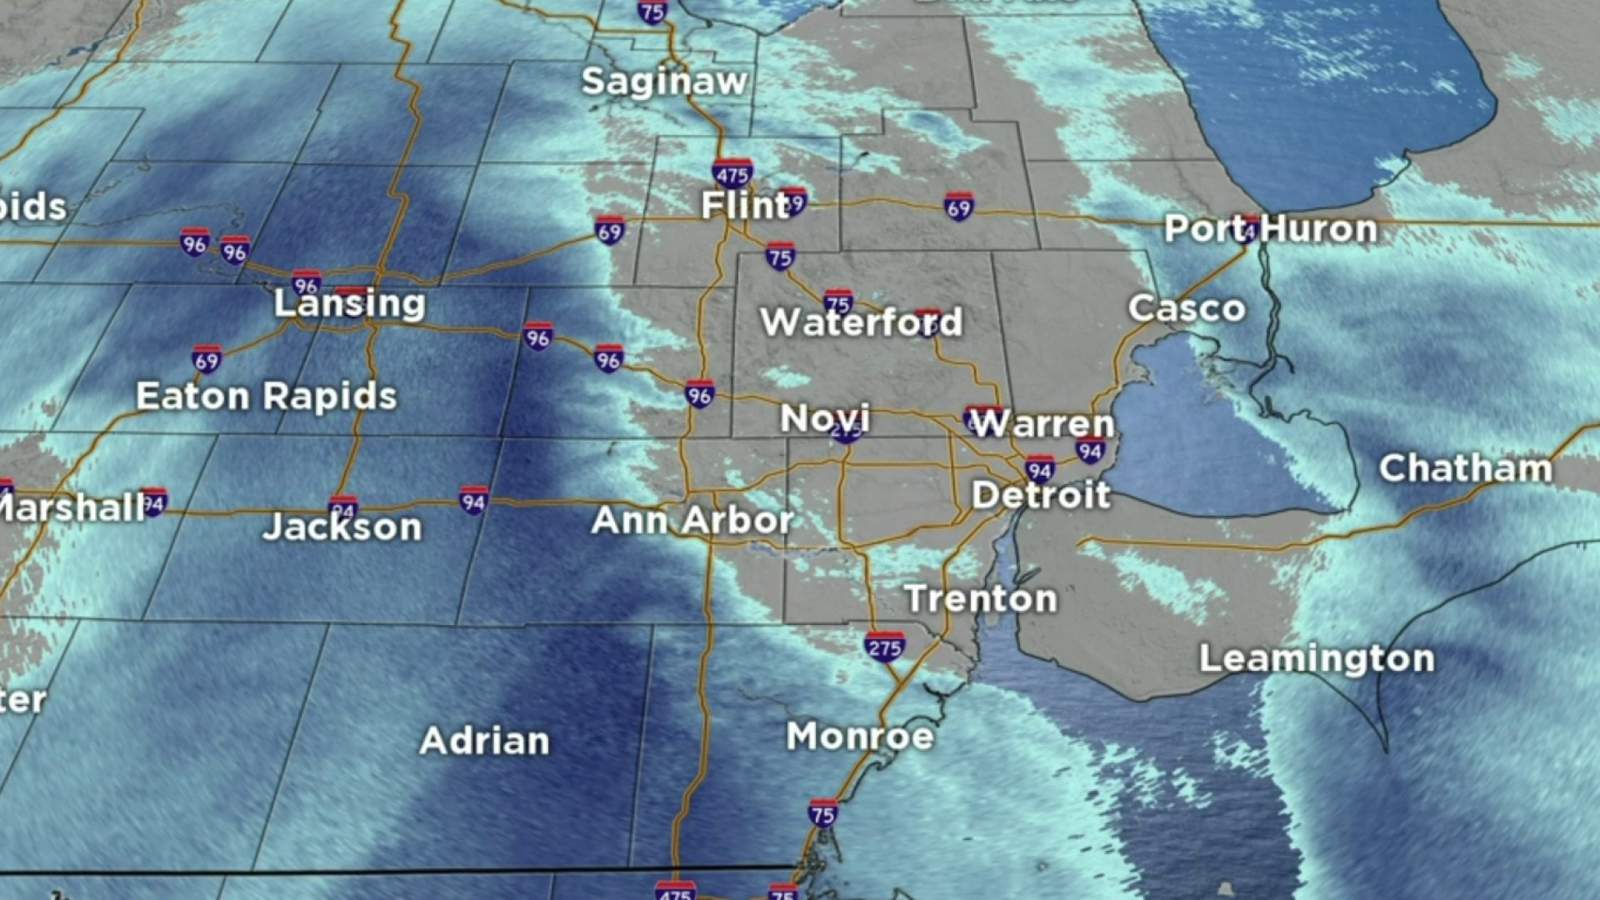 Metro Detroit weather: Snow arriving Sunday night, slippery Monday morning ahead